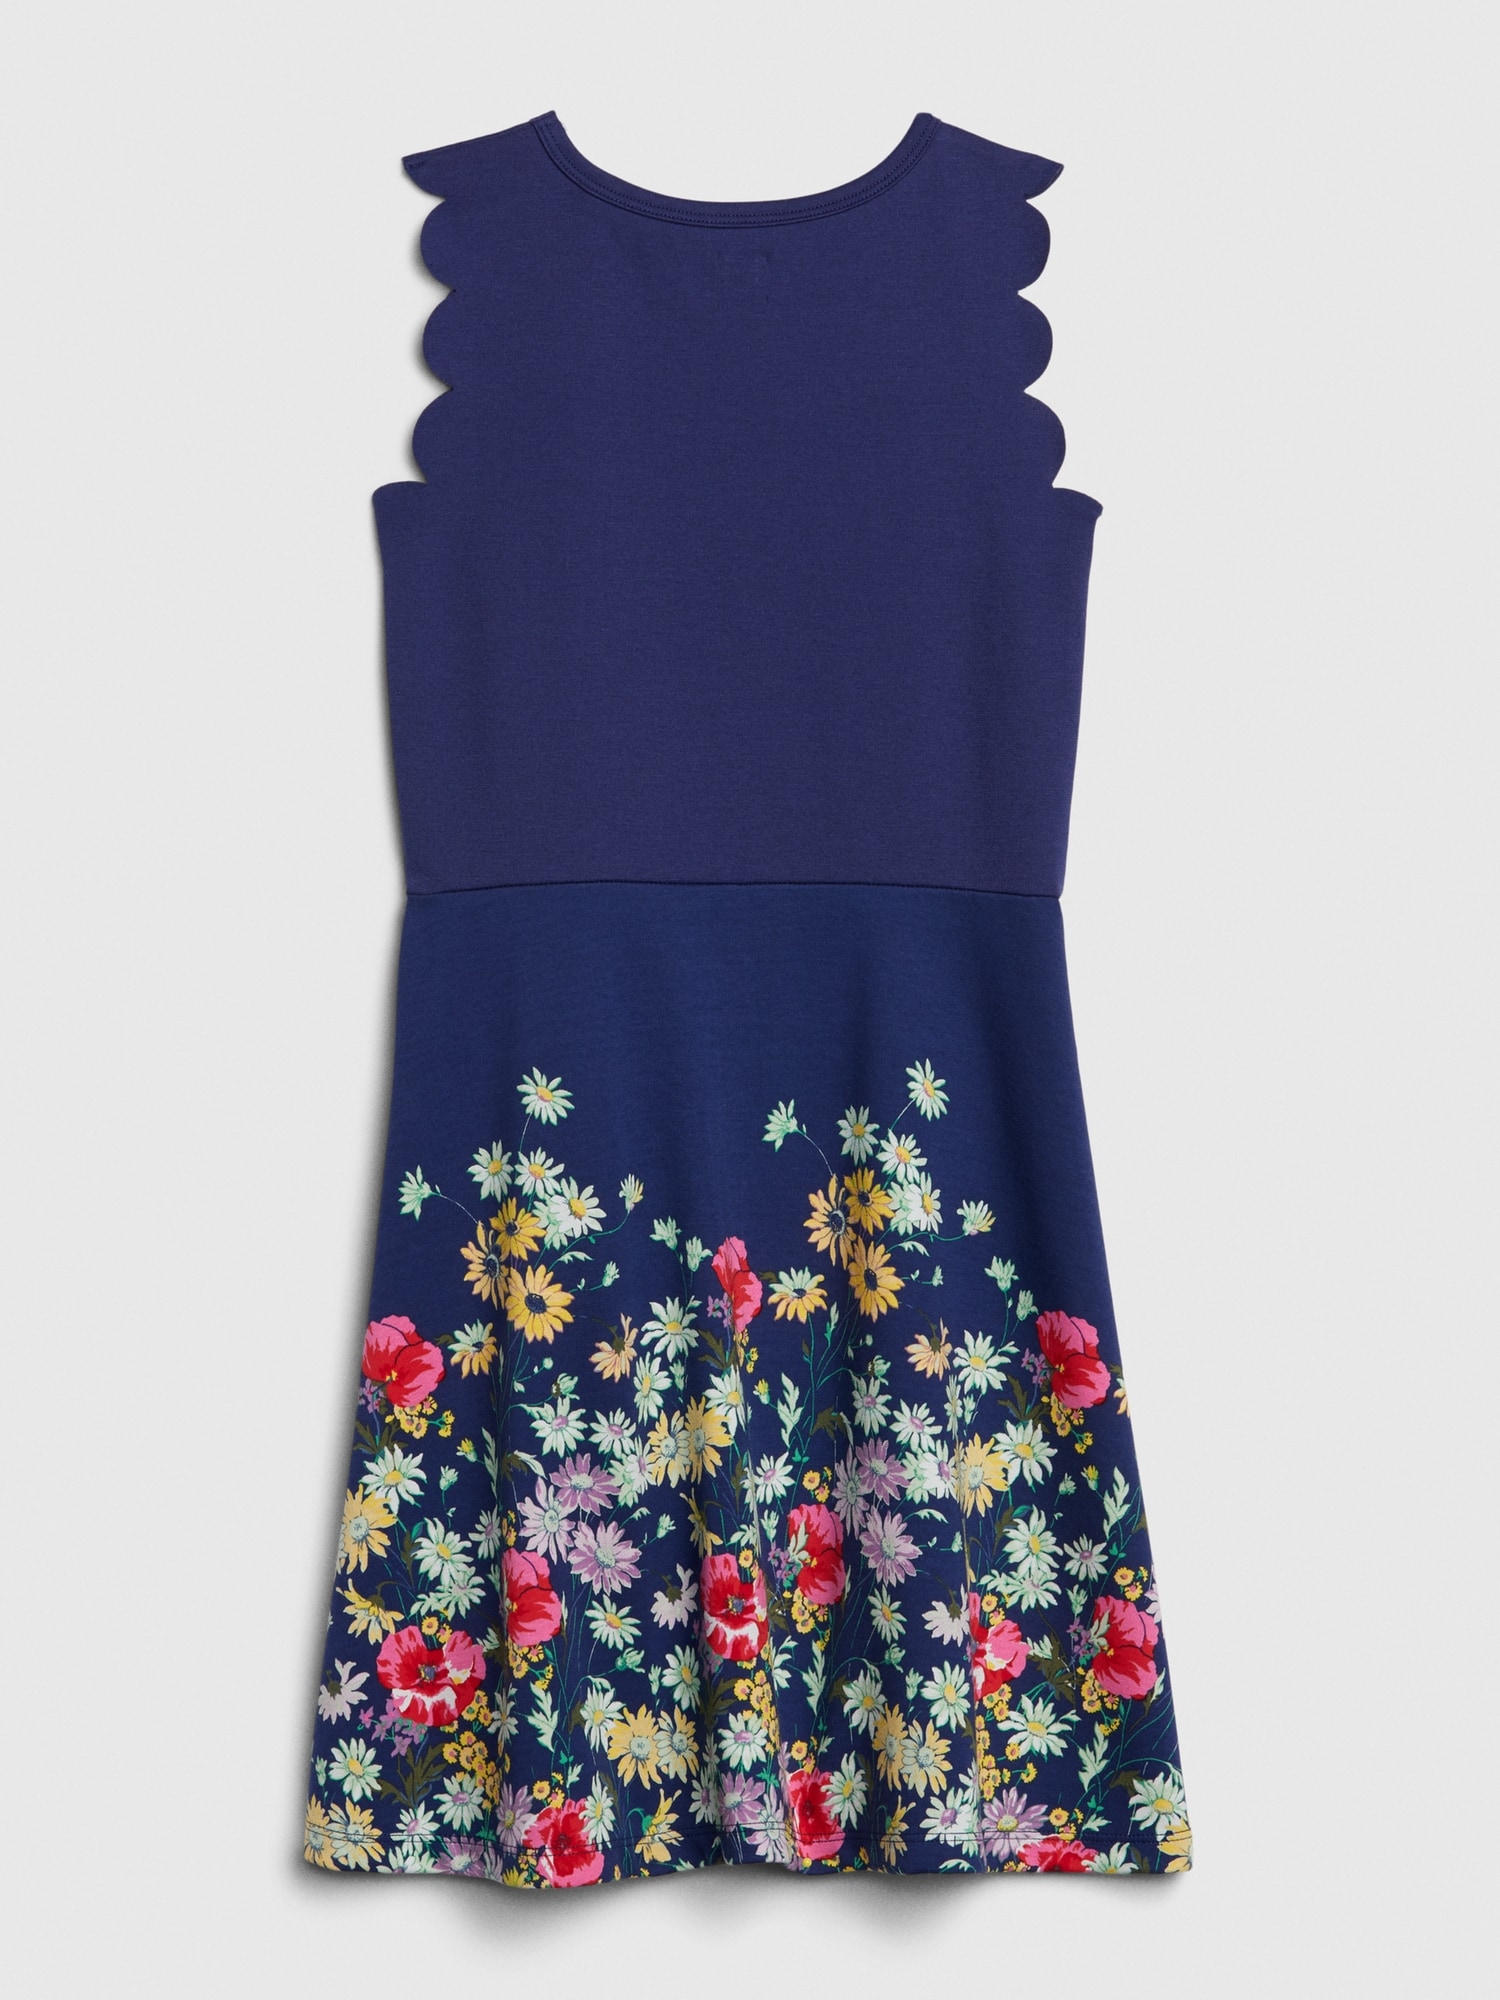 gap blue floral dress